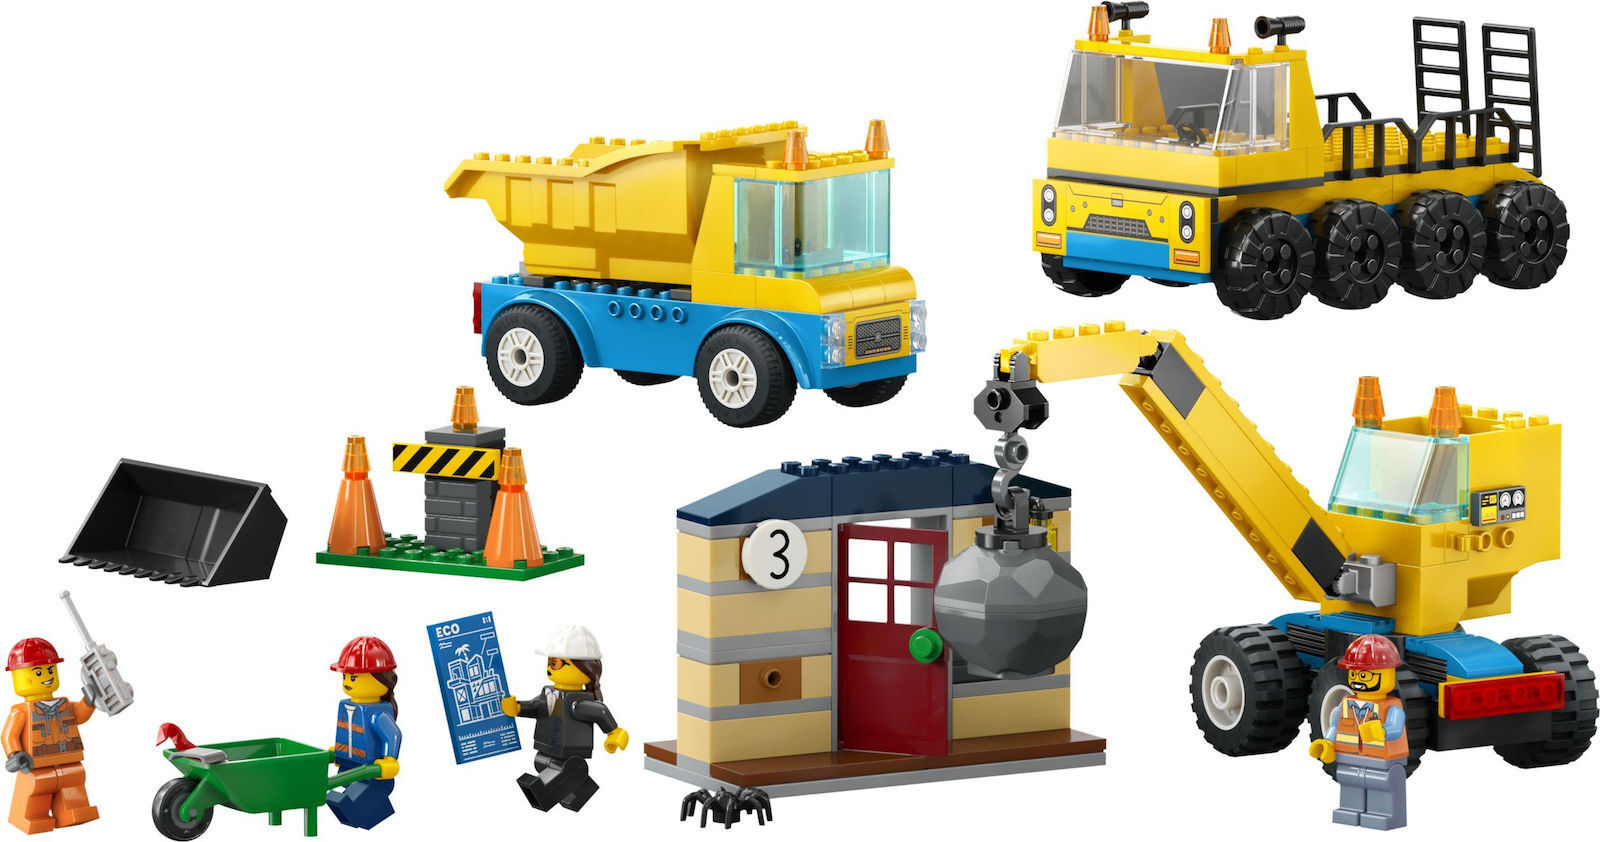 Lego City - Εργοτάξιο